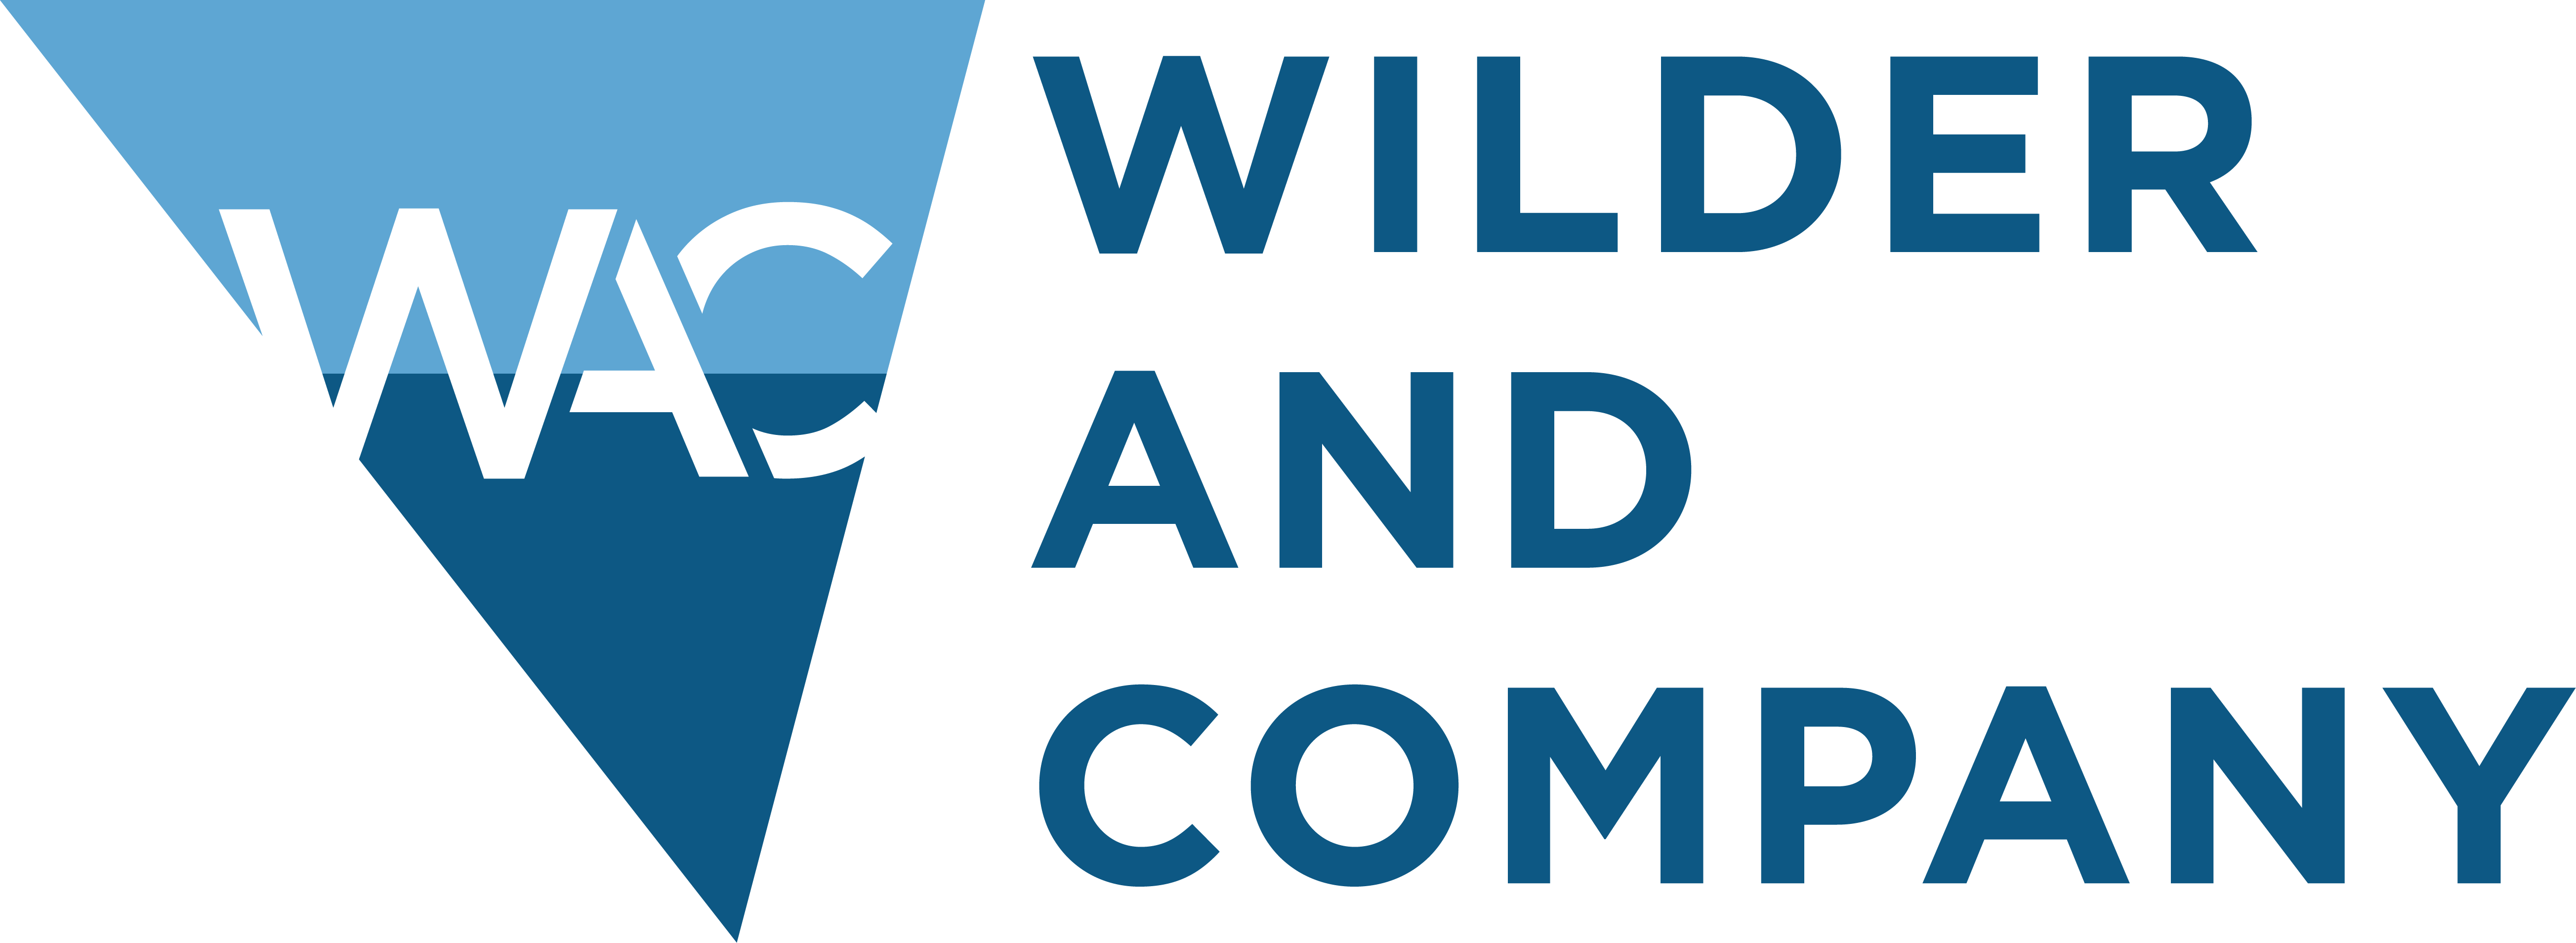 Wilder & Company Employment Agency